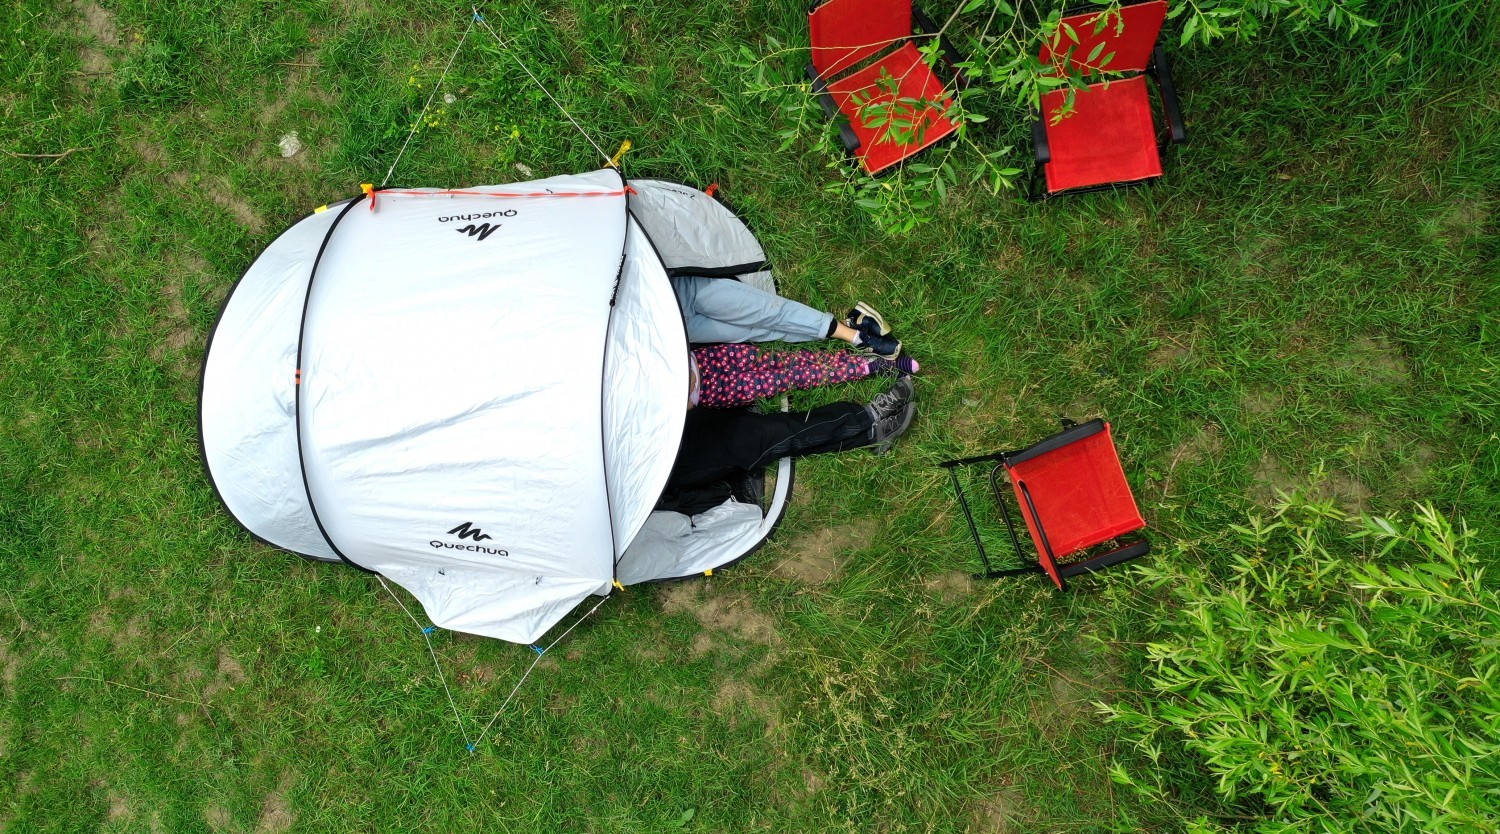 Inchirieri corturi și accesorii pentru camping